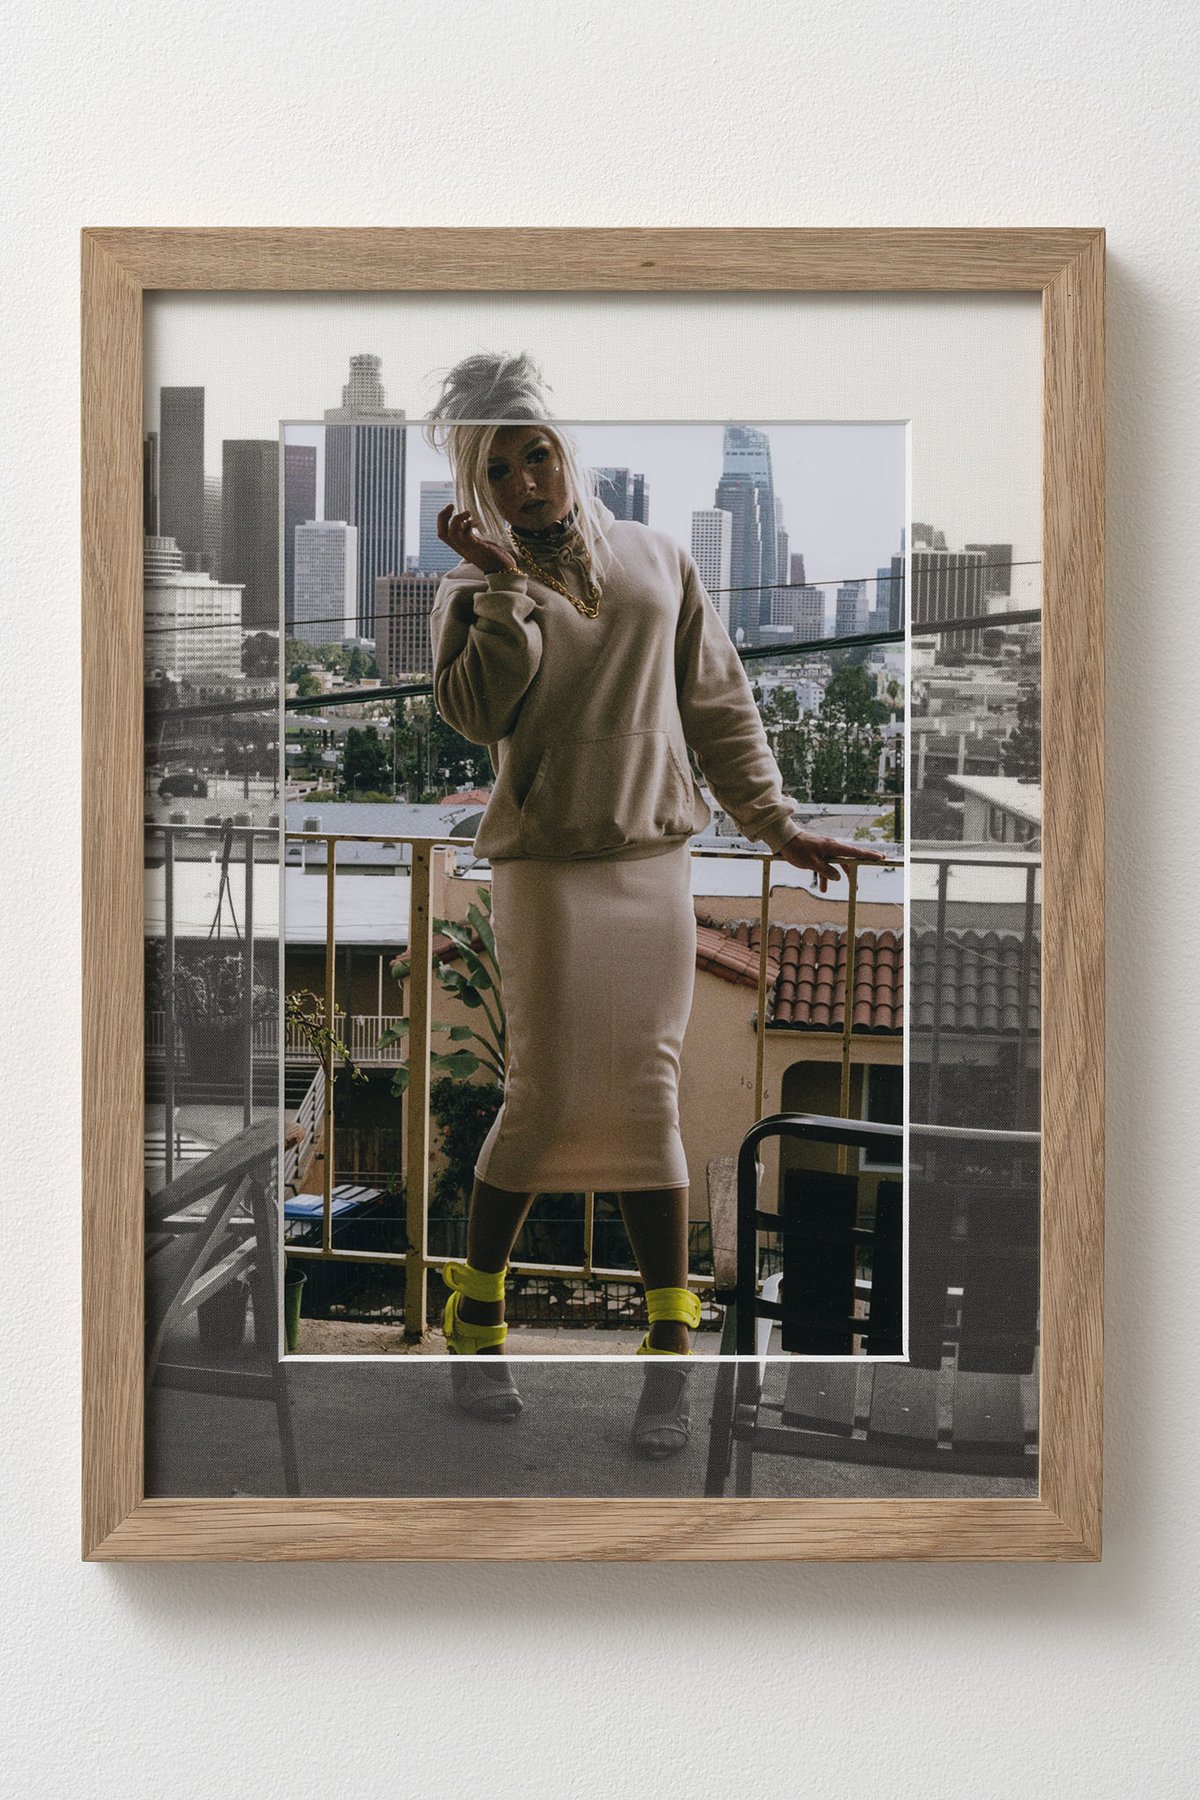 Philipp Timischl(ECHO PARK), 2019C-print, framed with custom passepartout43 x 33 cm